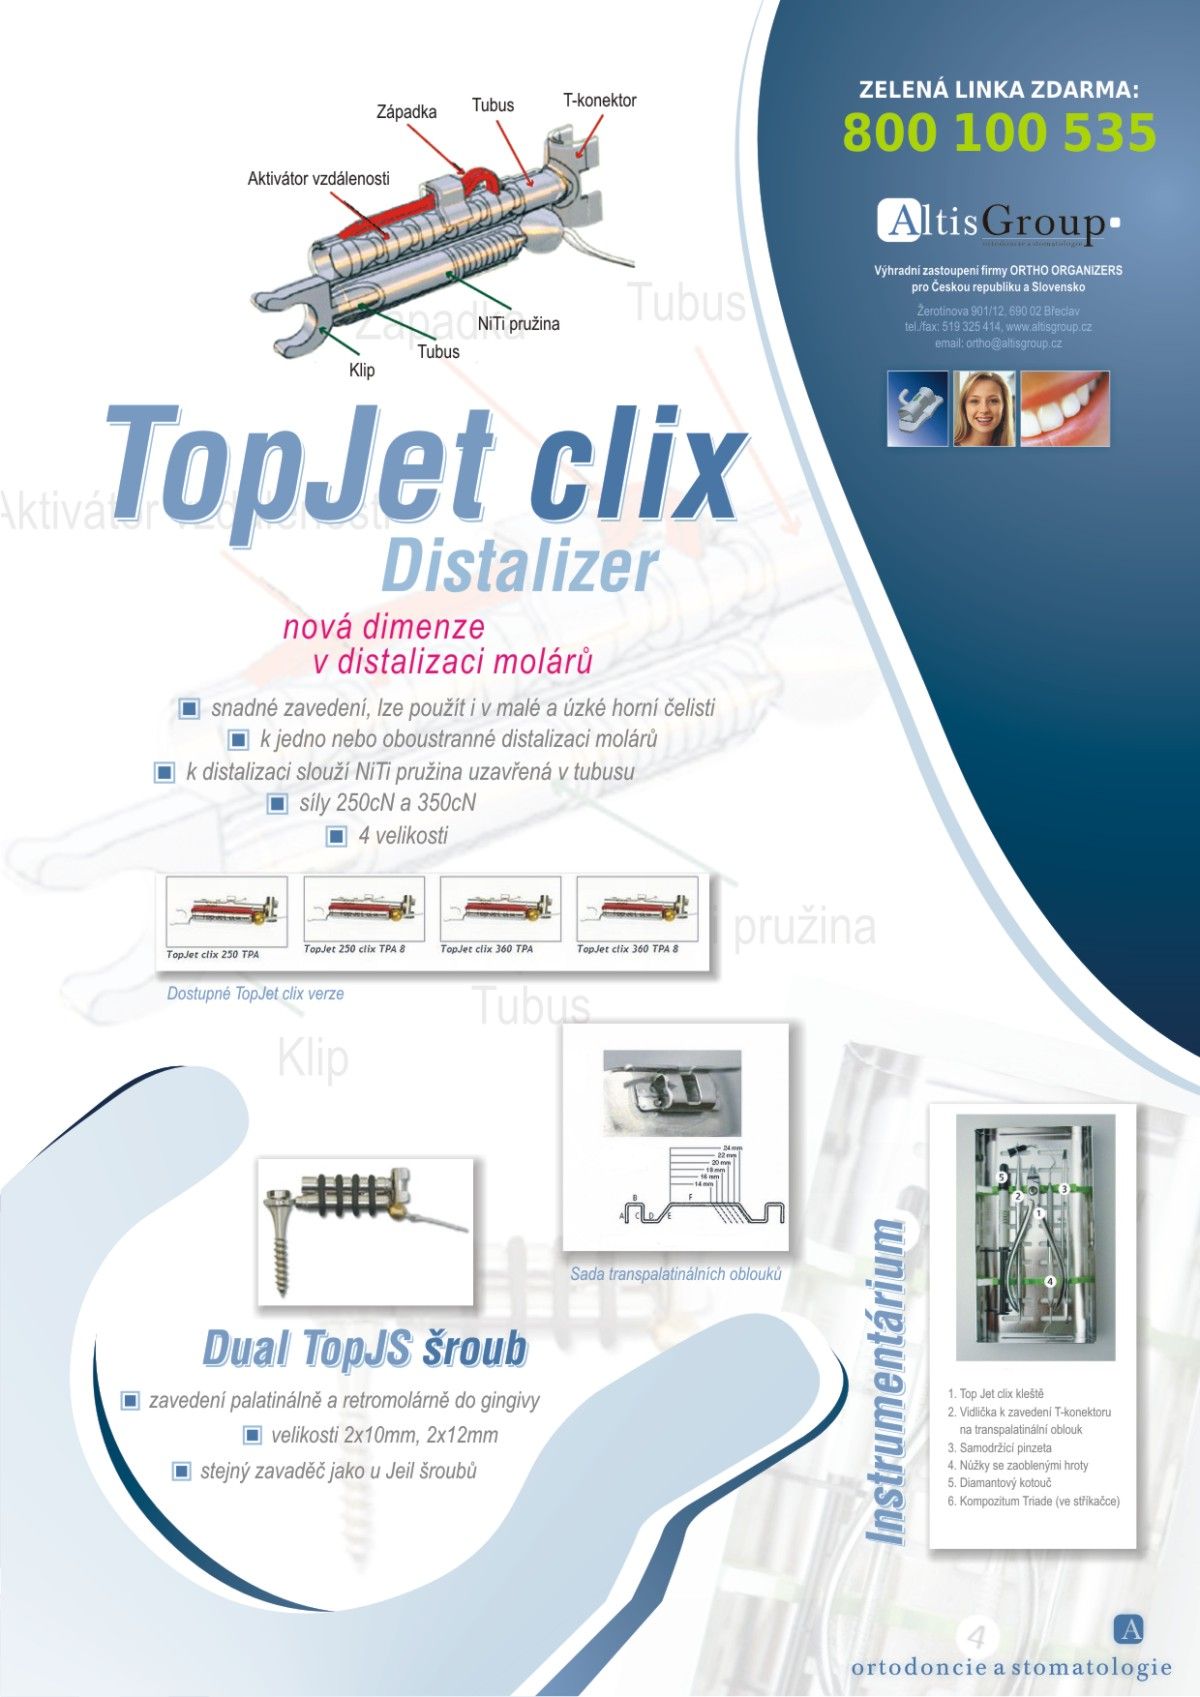 TopJet click Distalizer e-shop